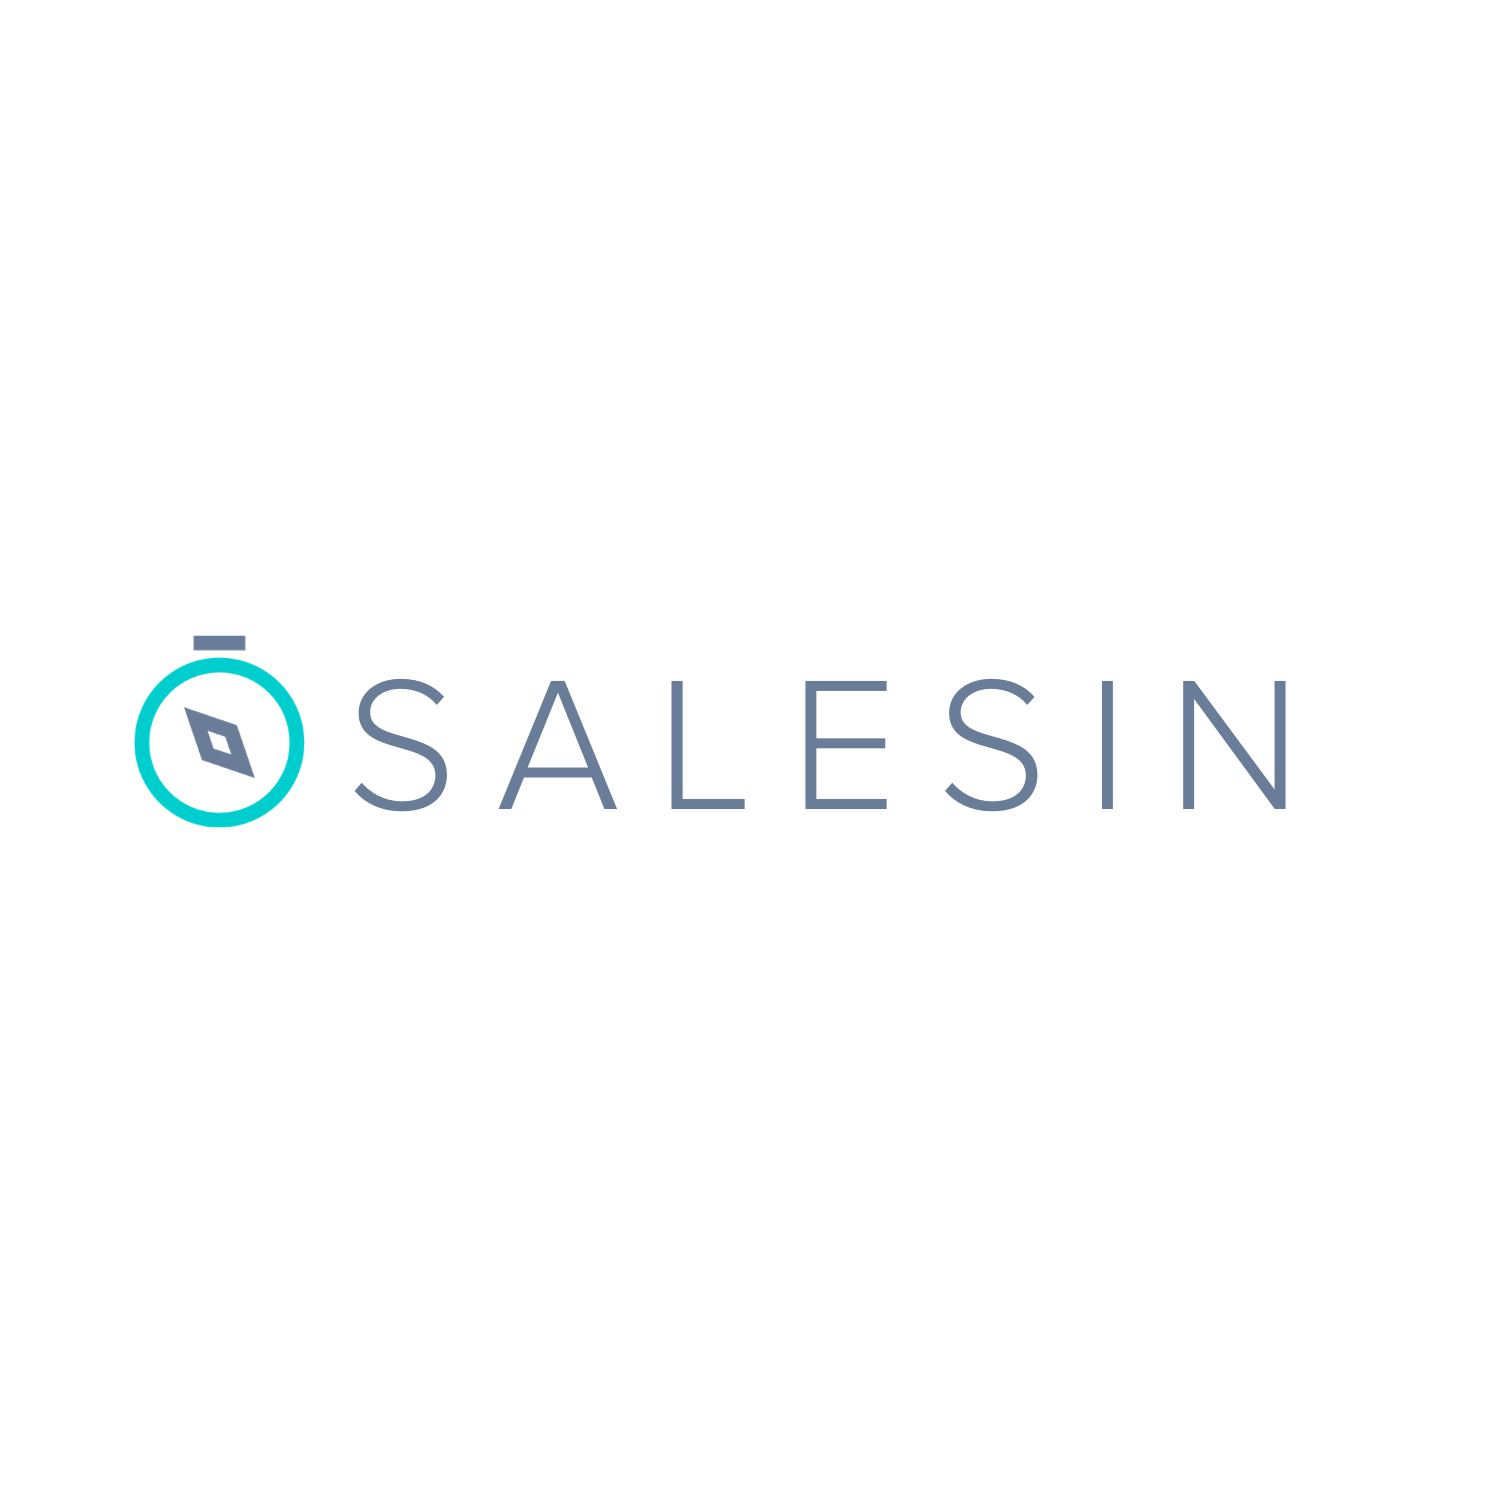 Salesin.io profile on Qualified.One